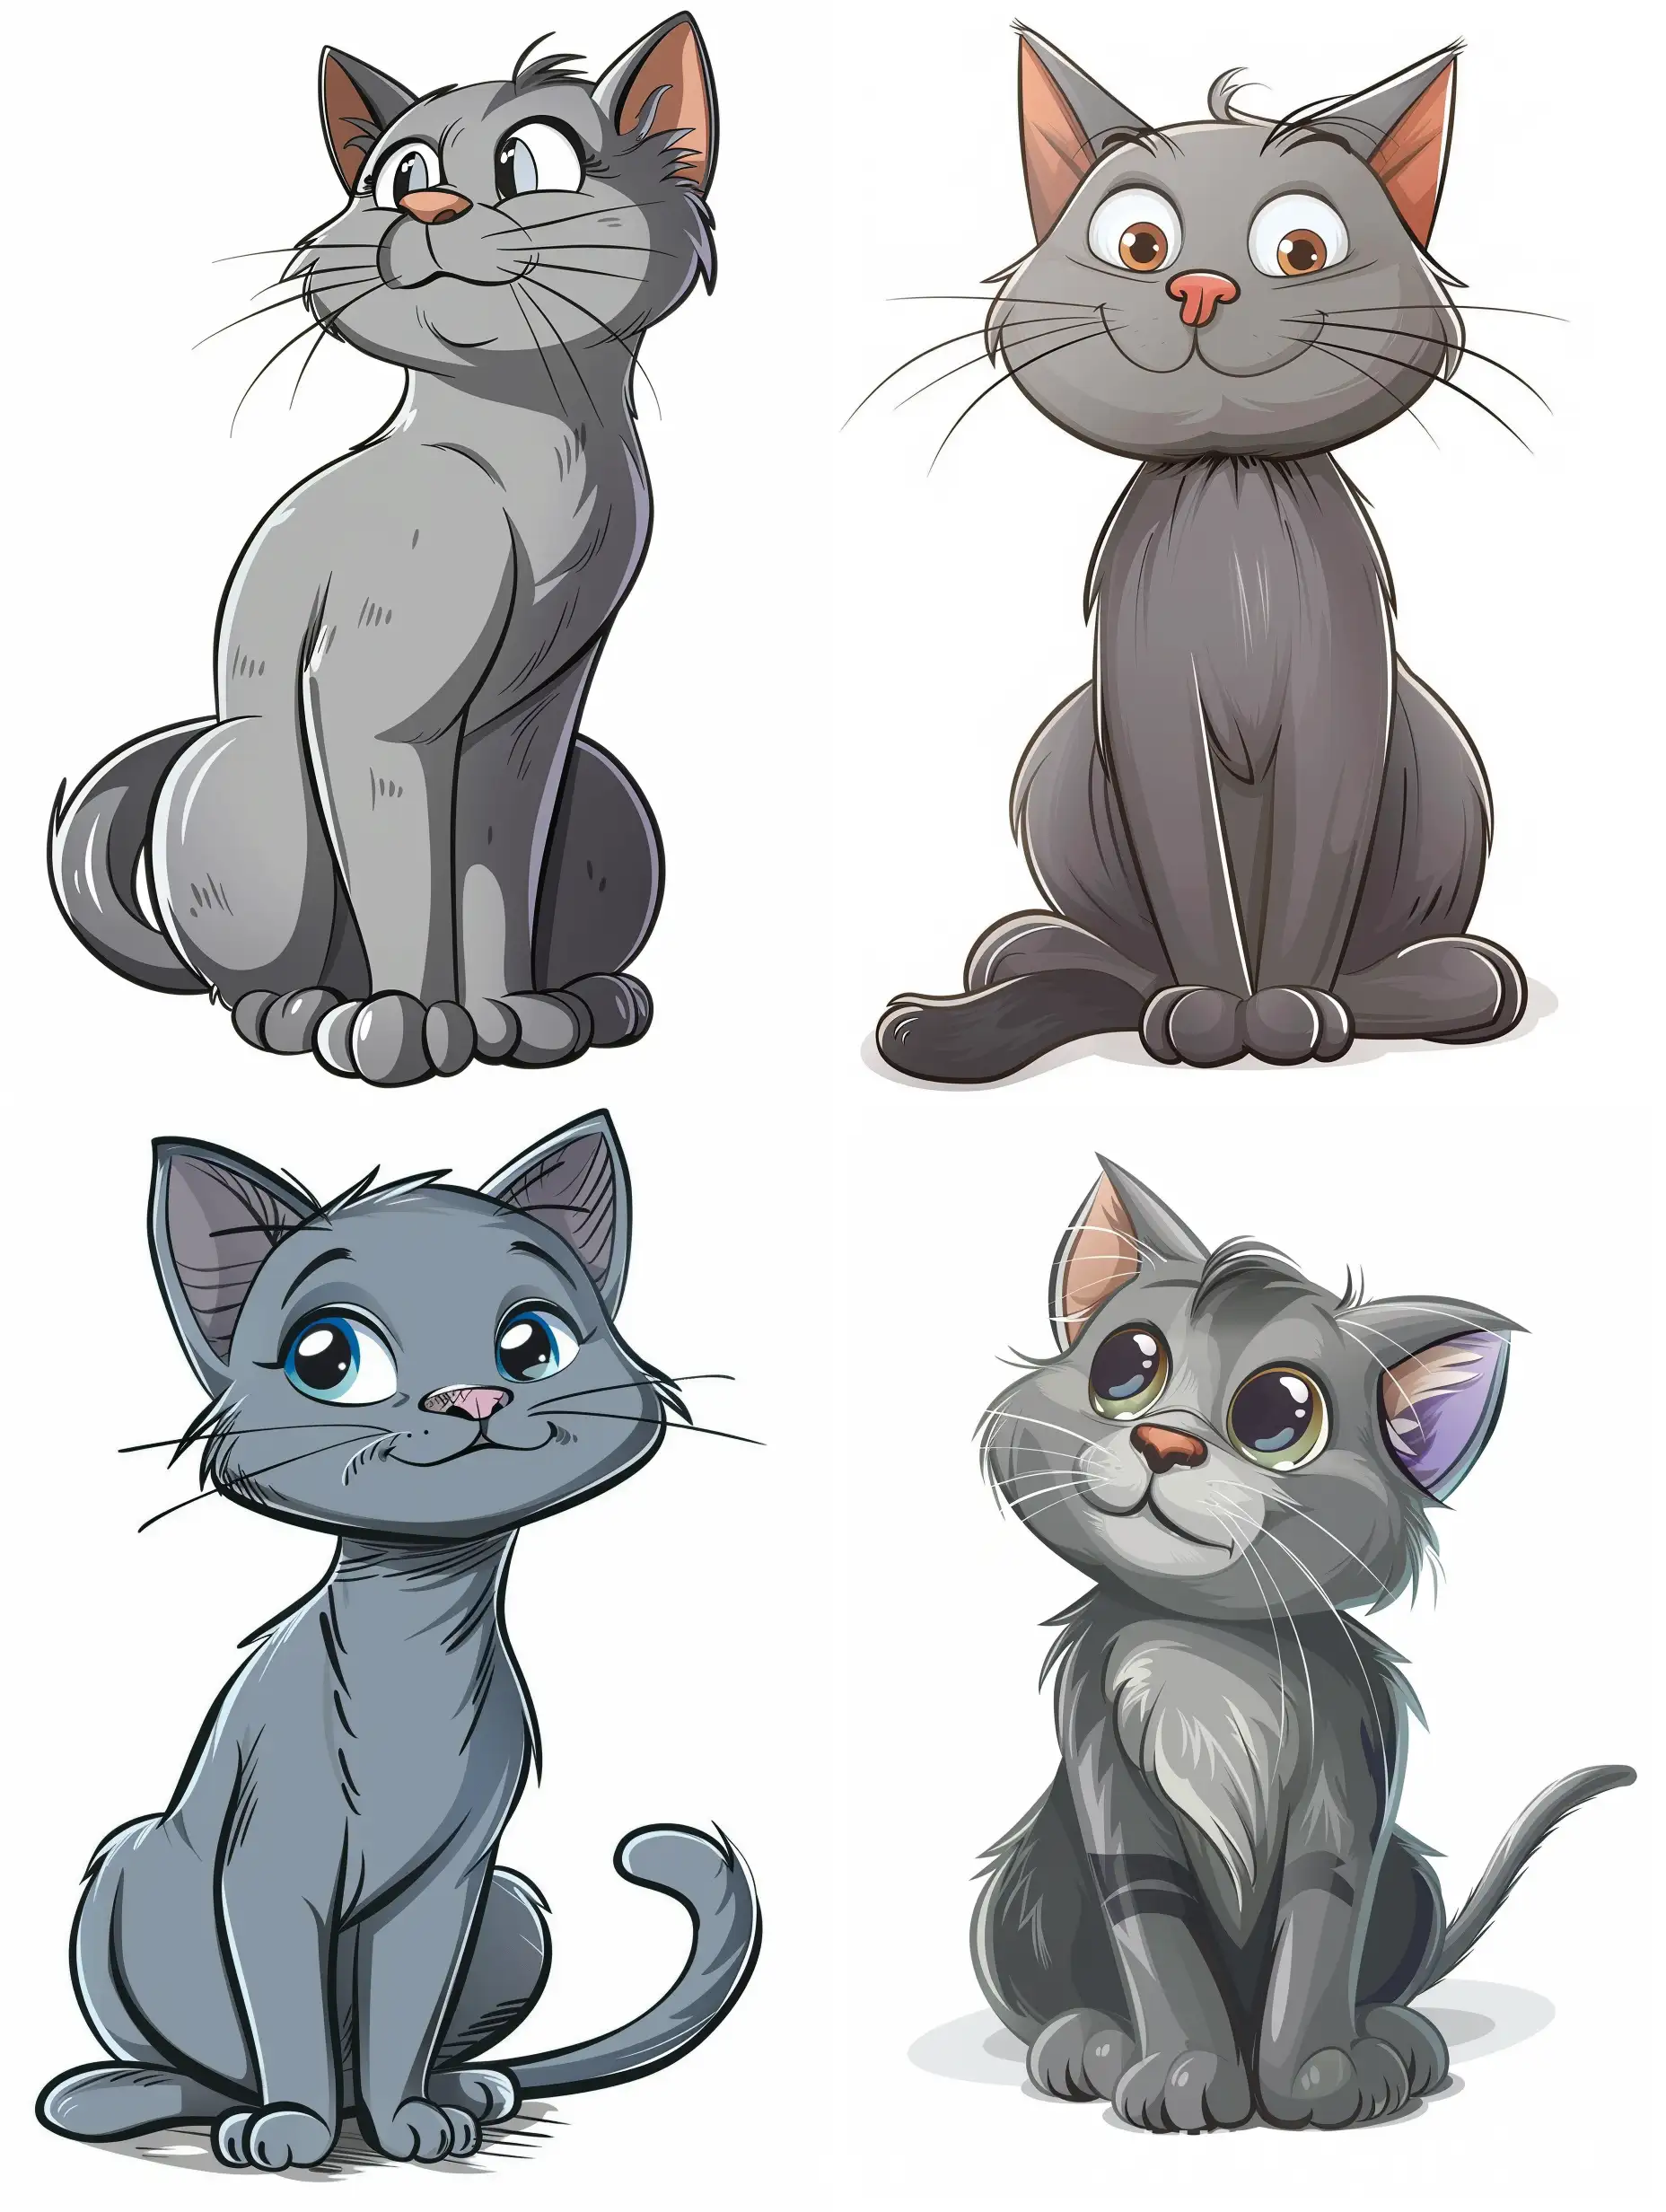 Playful-Cartoon-Gray-Cat-Vibrant-and-Whimsical-Art